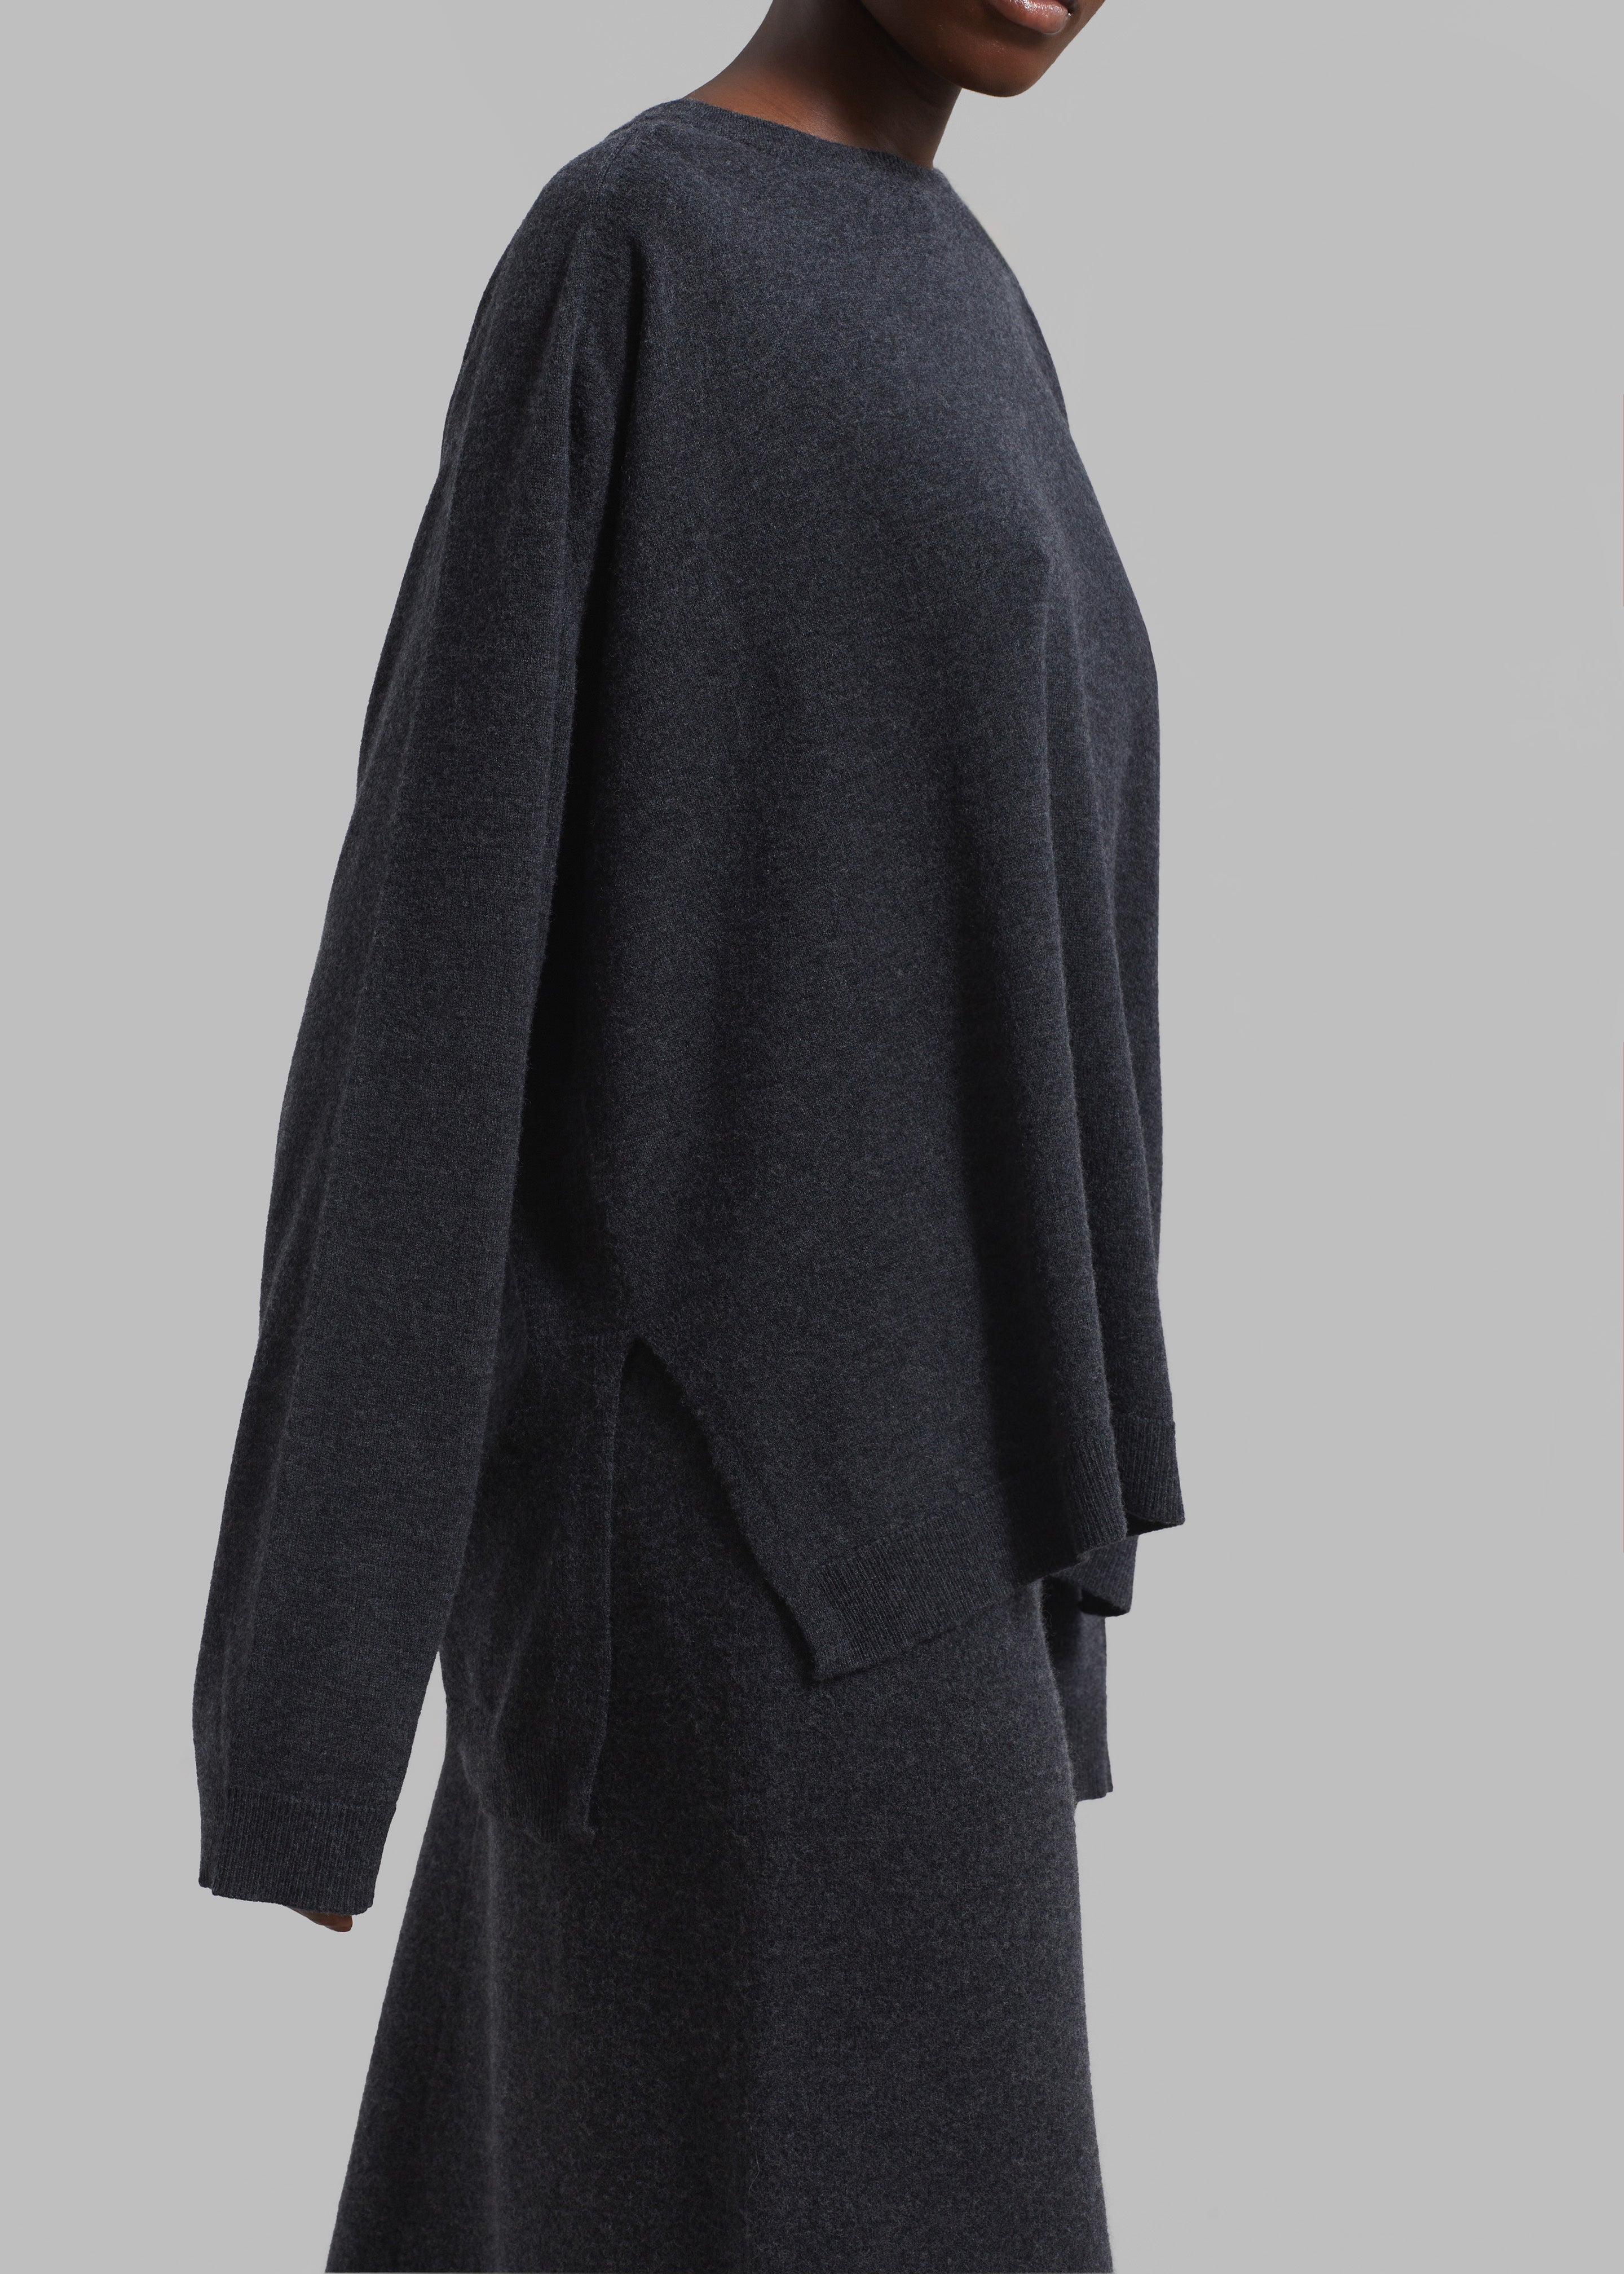 Bellamy Wool Sweater - Charcoal - 2